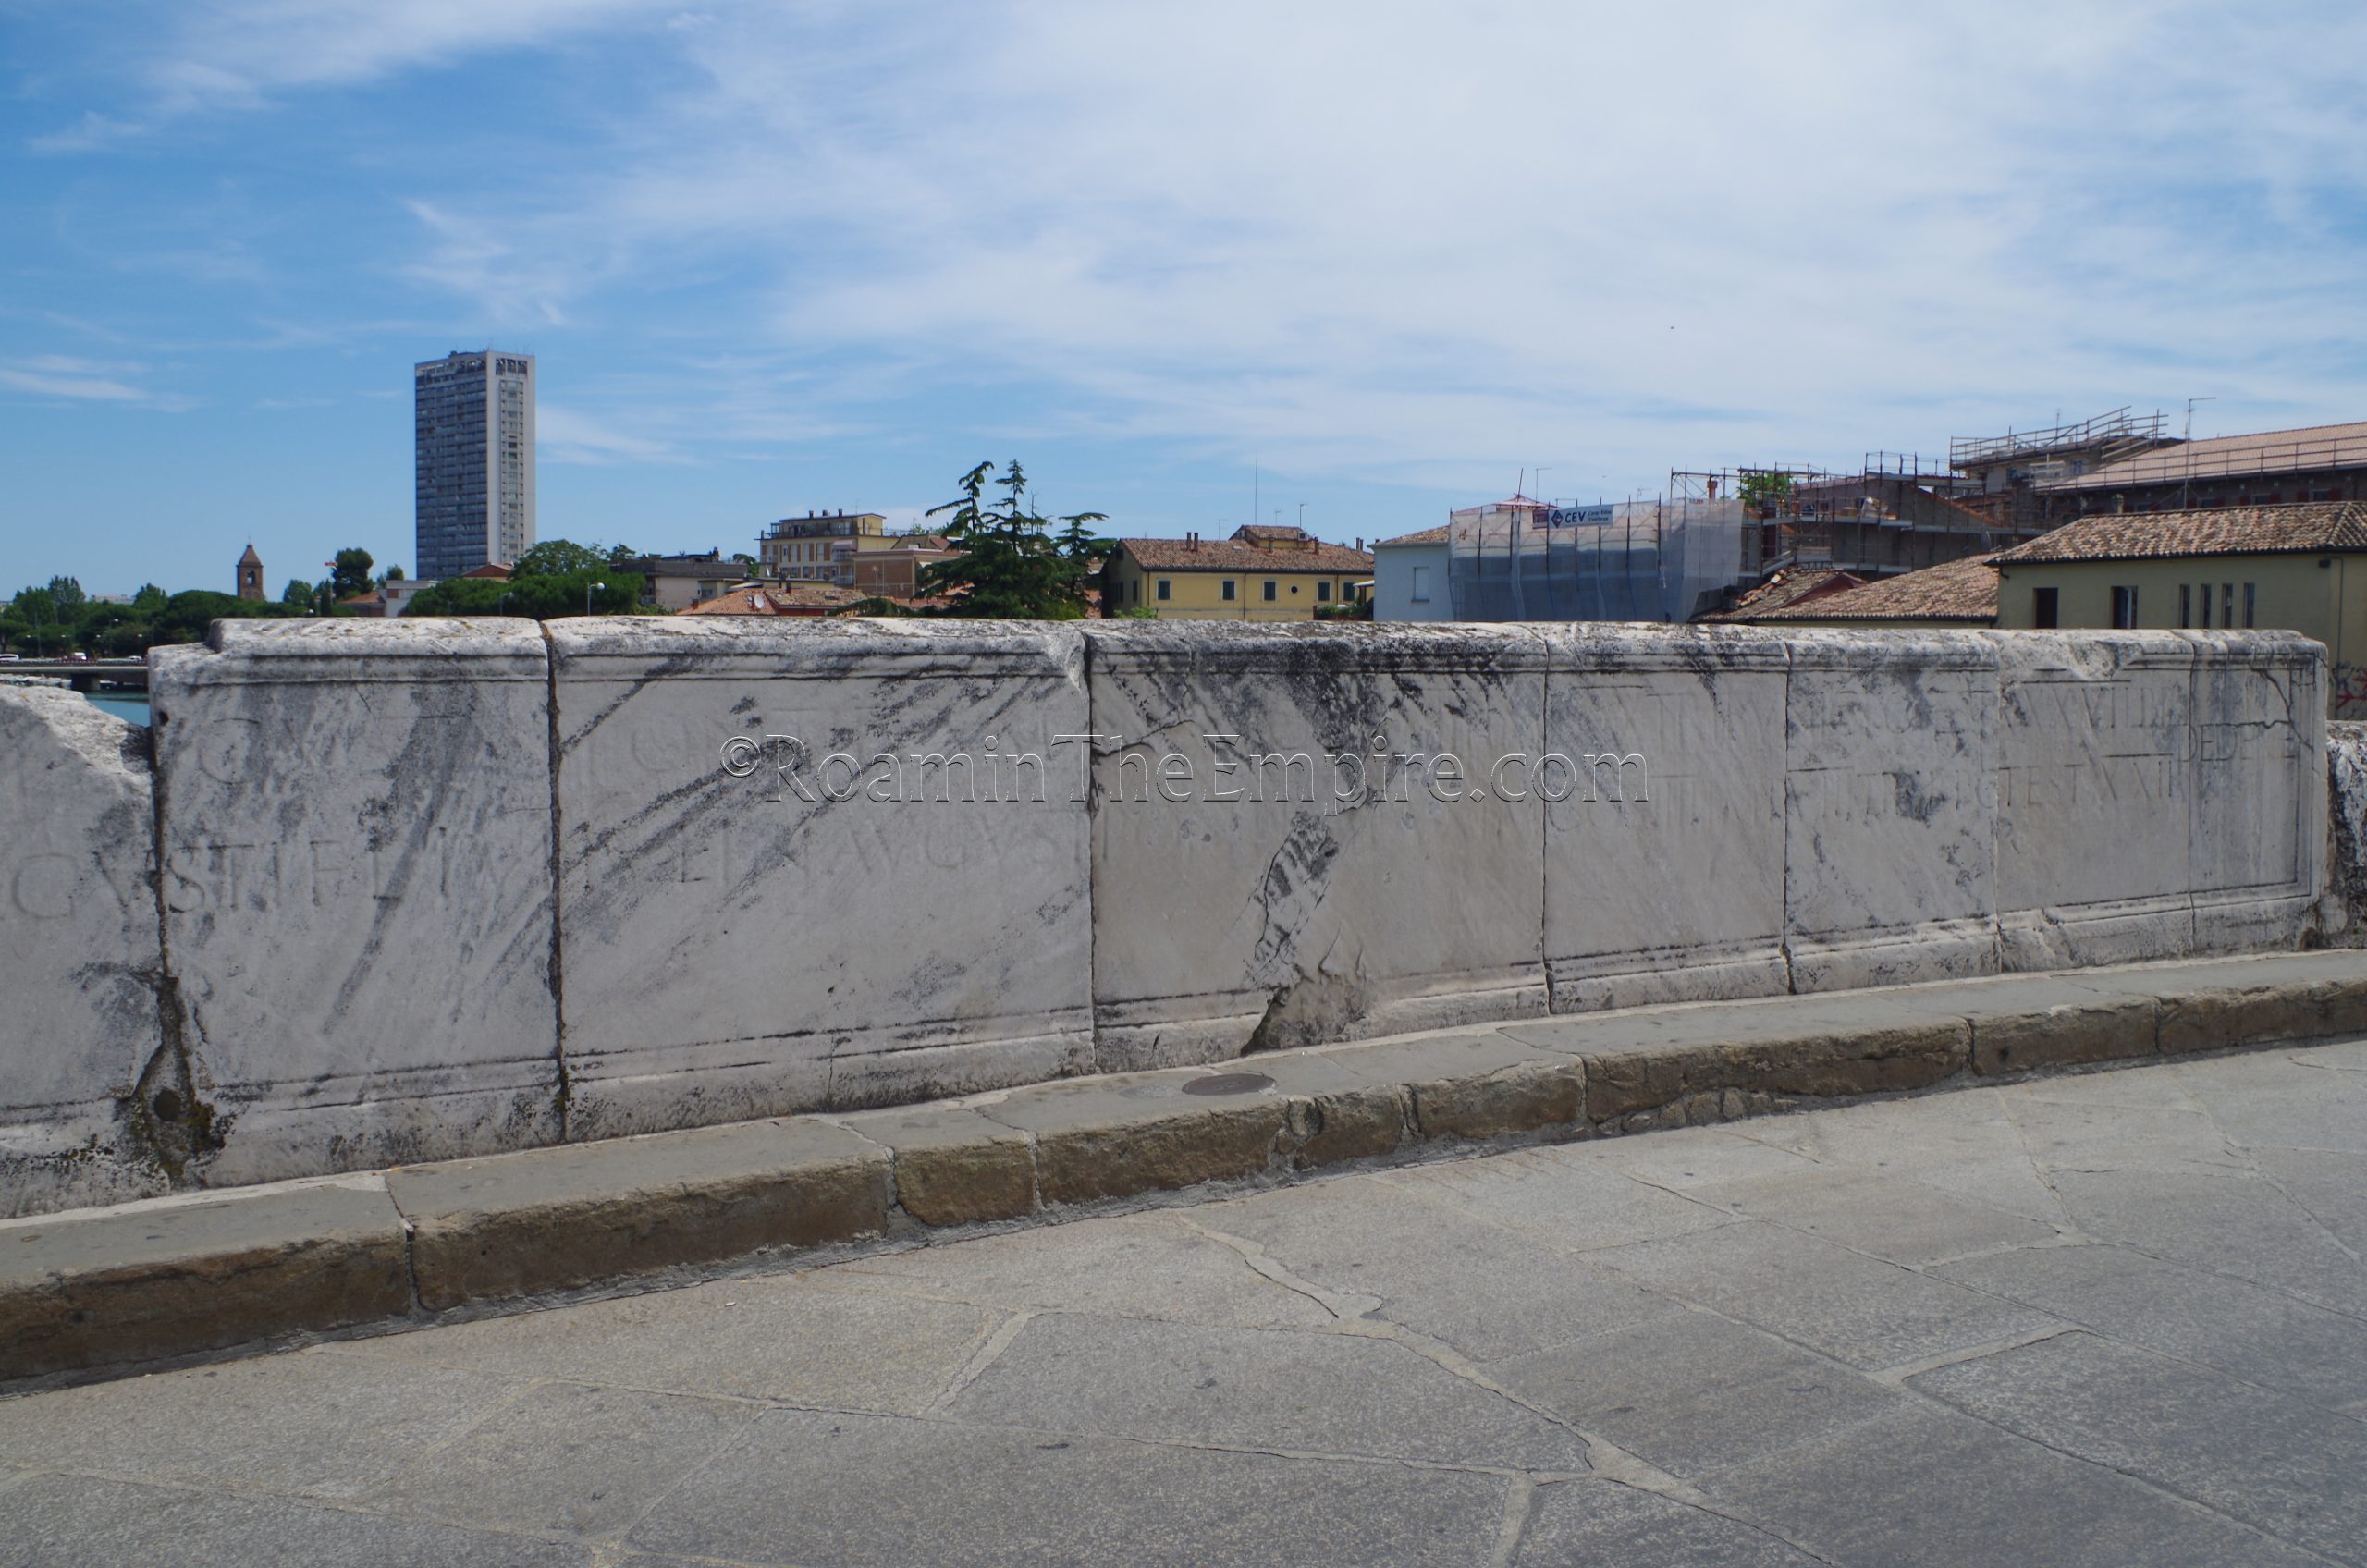 Inscription on the parapet of the Ponte di Tiberio.